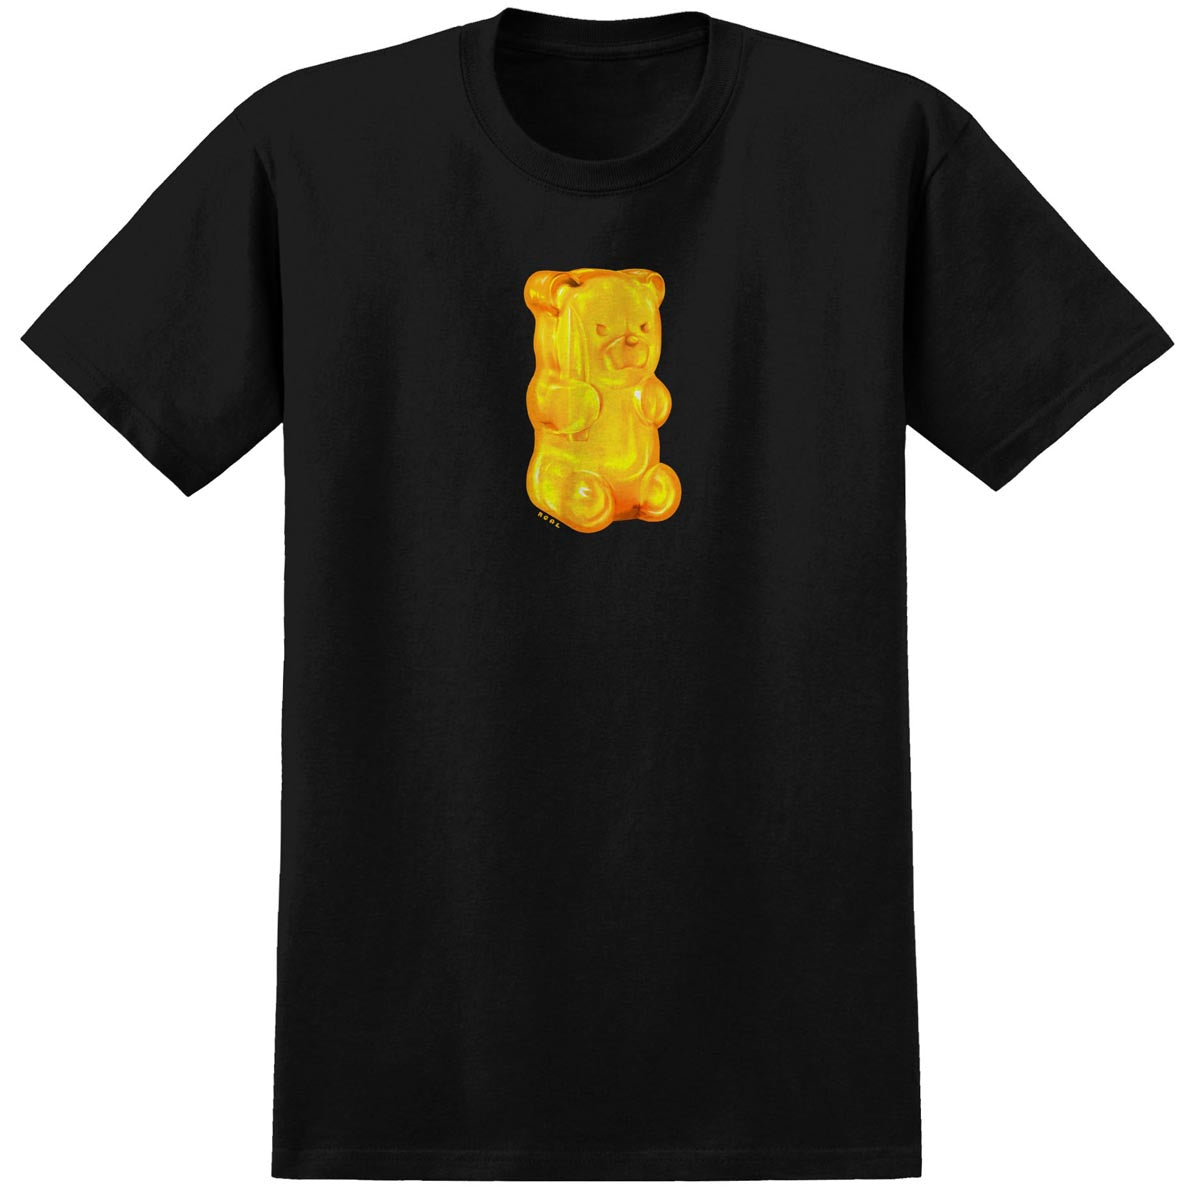 Real Fun Bear T-Shirt - Black image 1